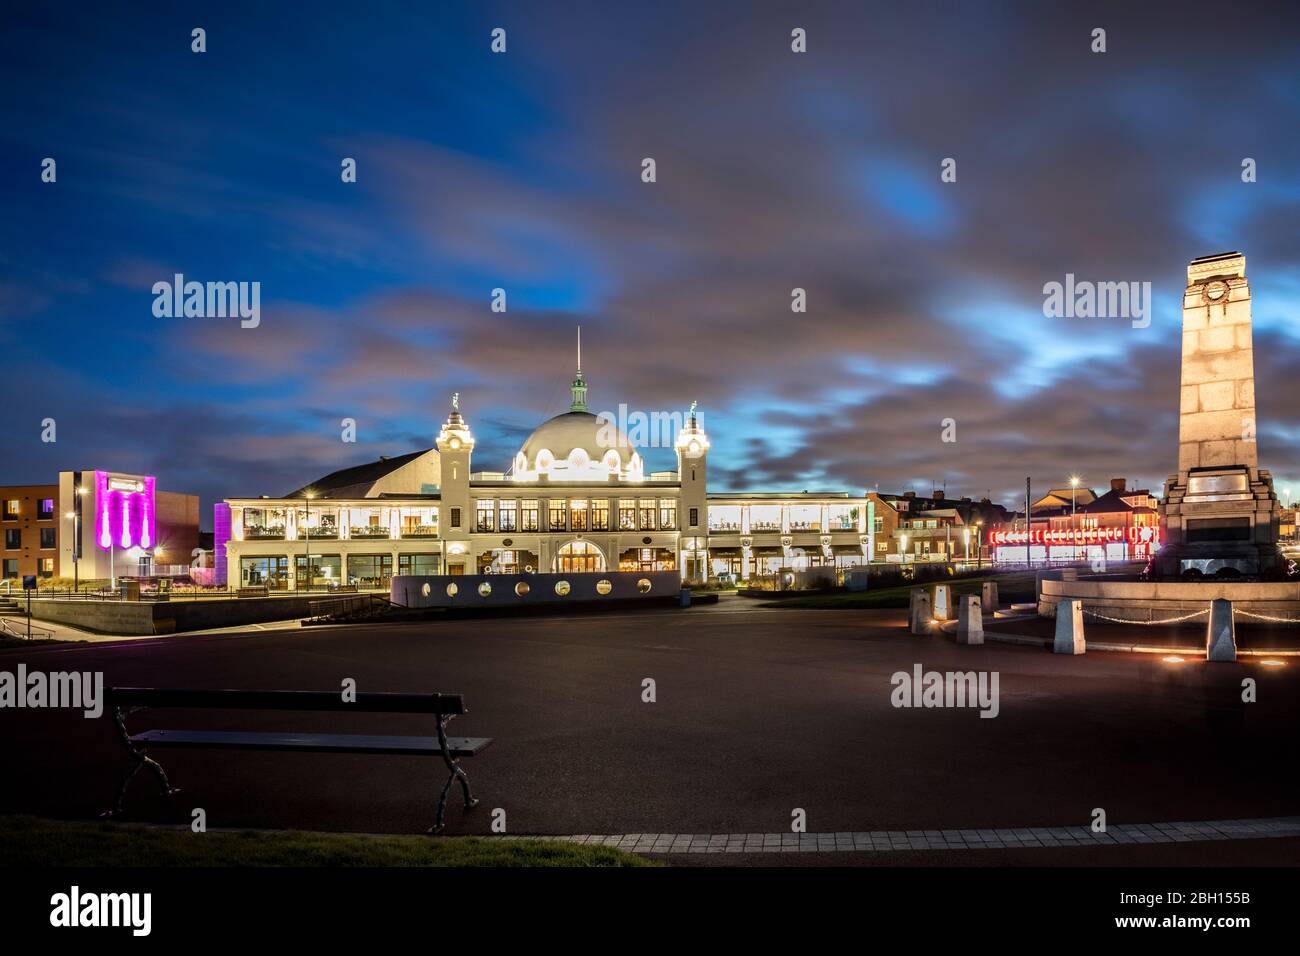 Spanish City Dome at night, Whitley Bay, Tyne and Wear, England, UK, GB. Europe. Stock Photo